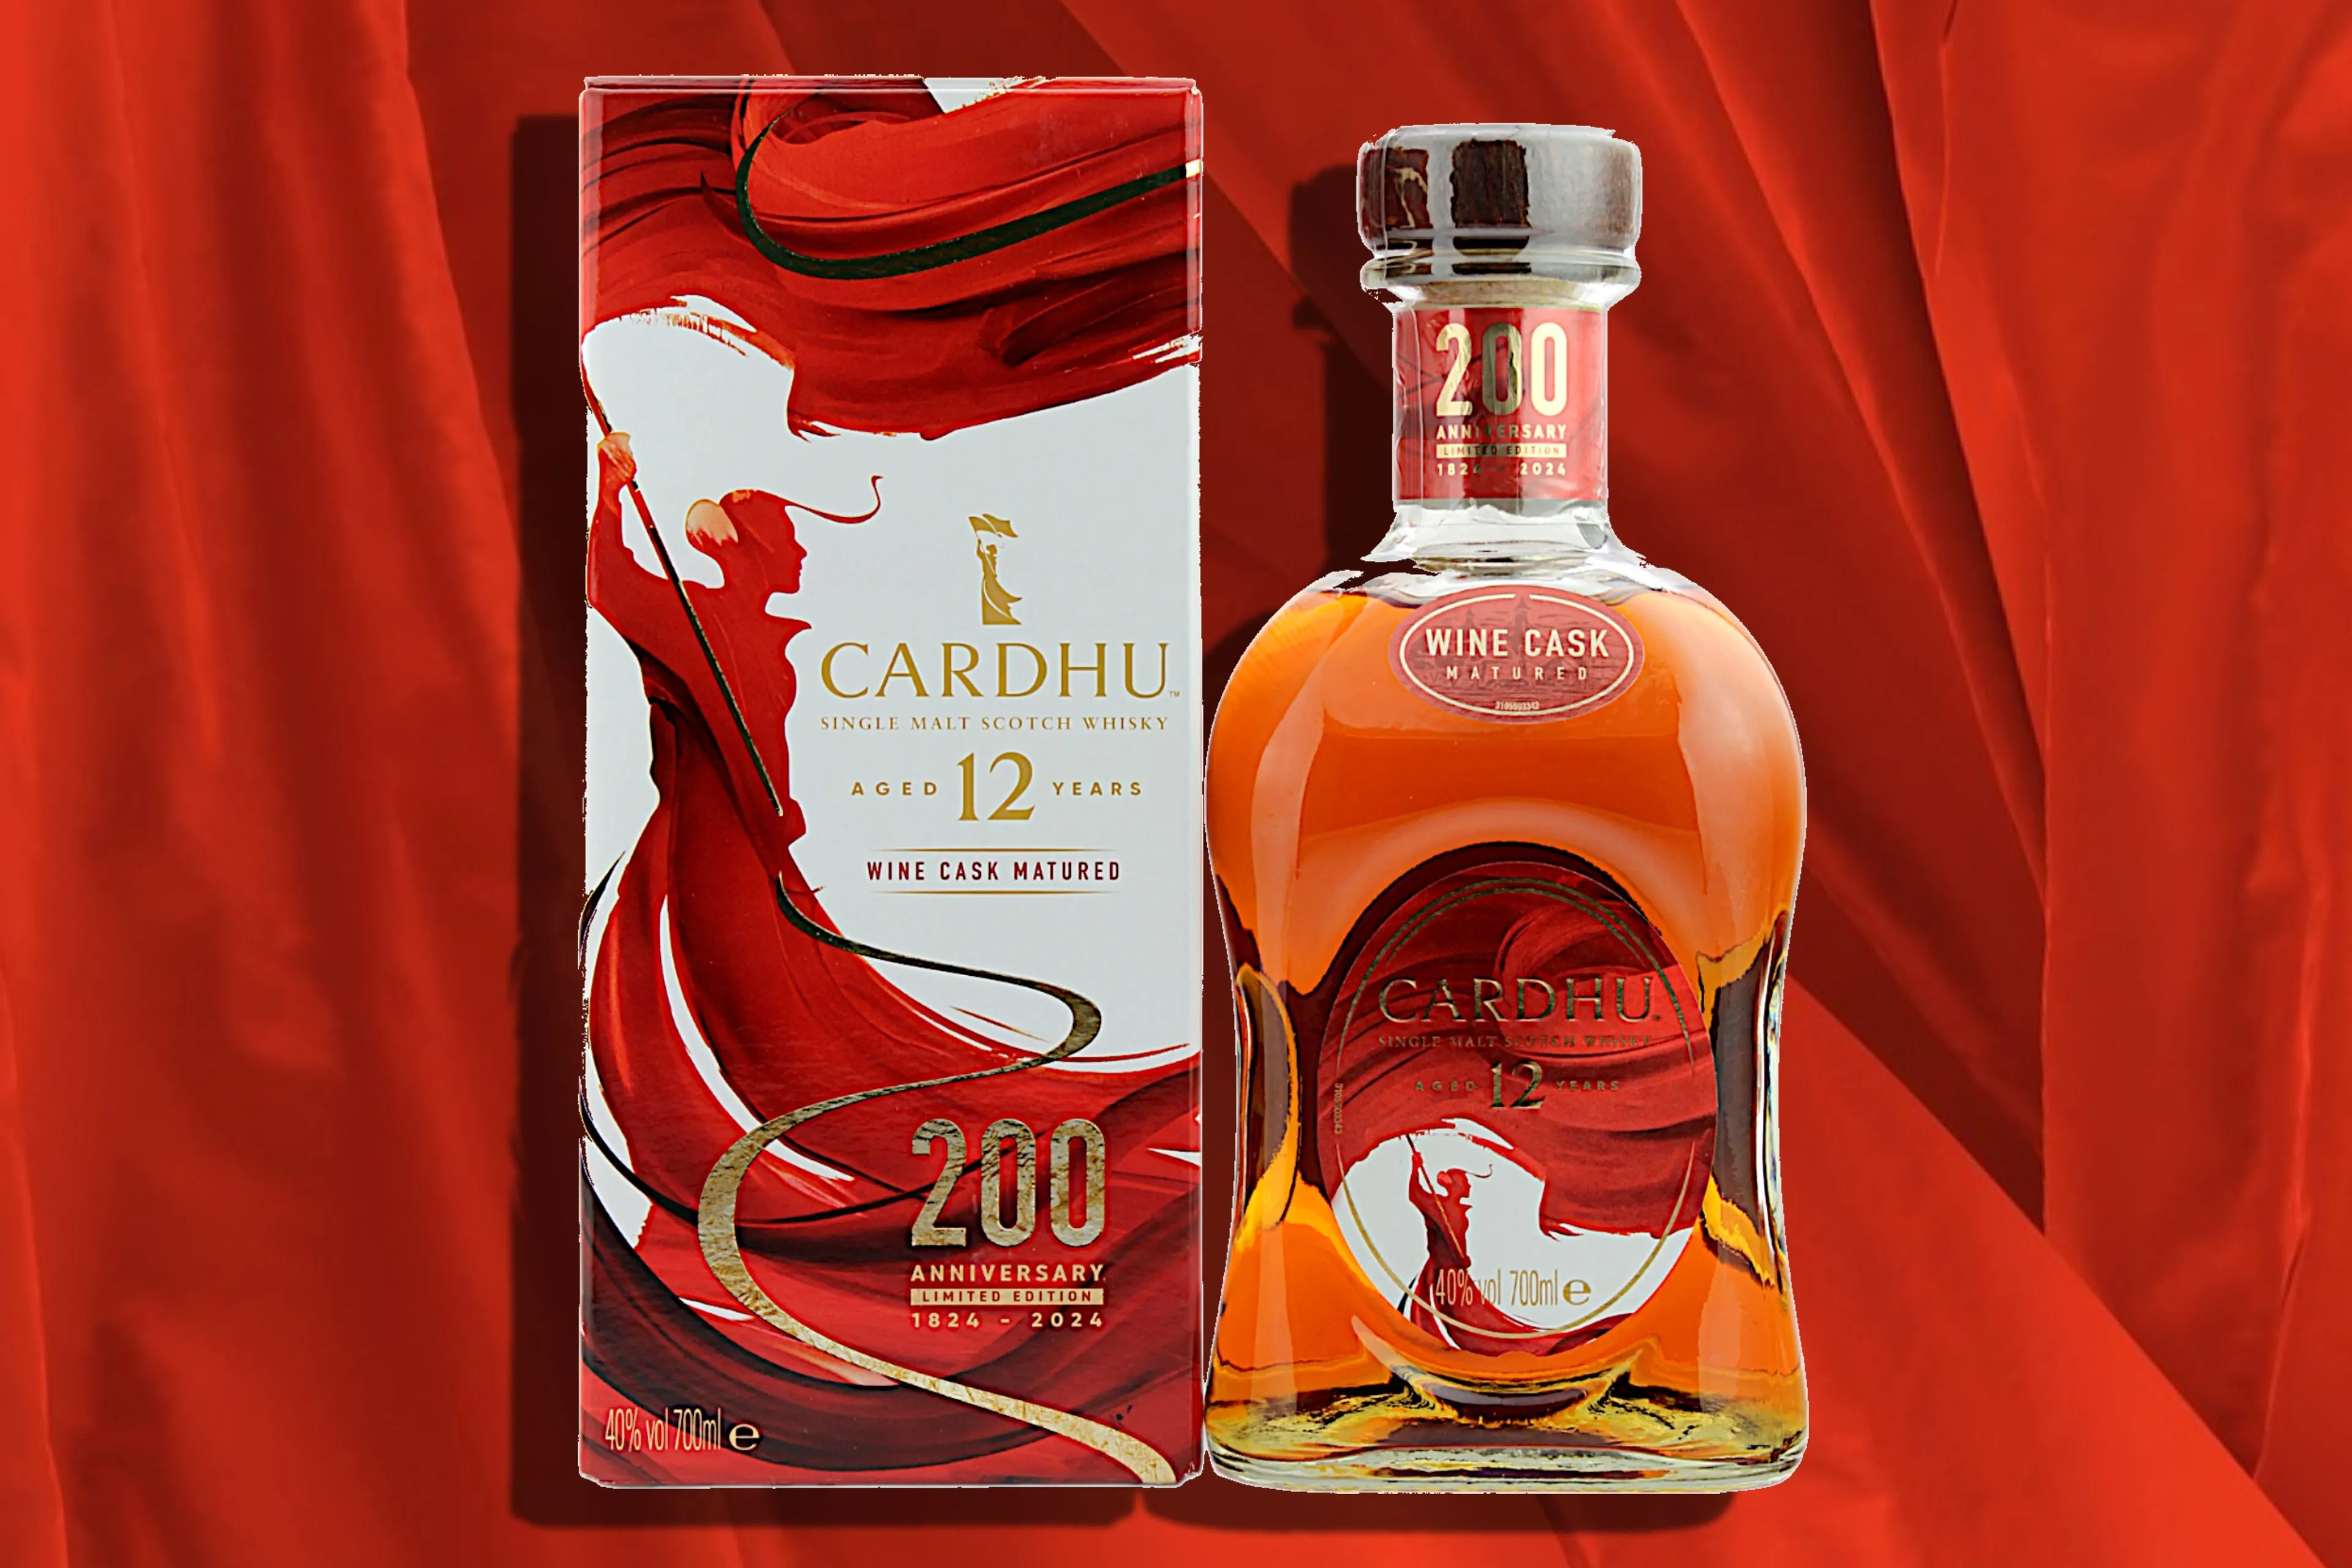 carshu 12yo 200 anniversary whisky